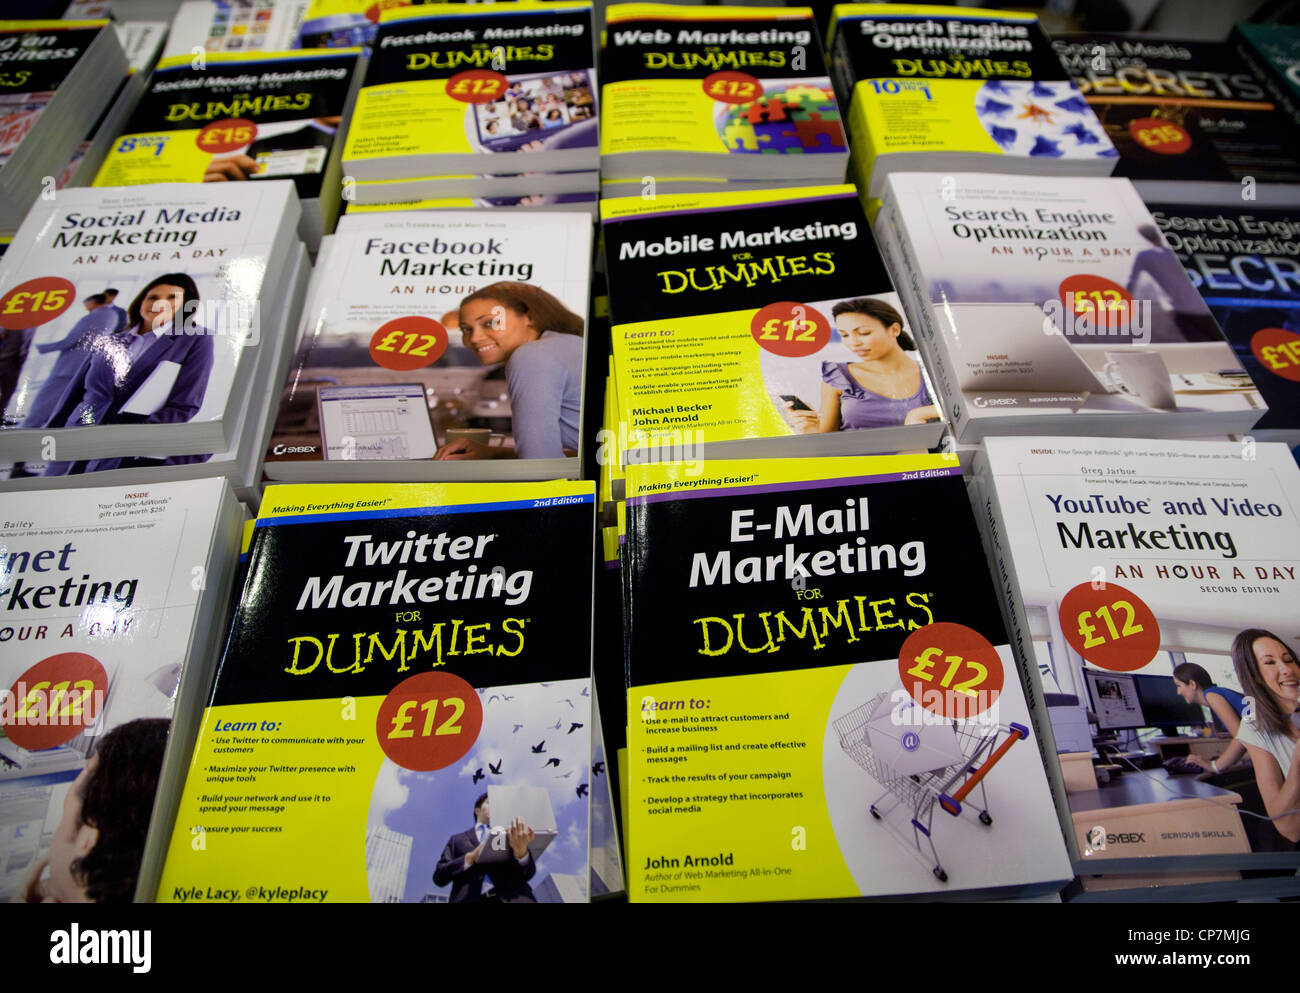 Internet and social media marketing books at Internet World show, London Stock Photo